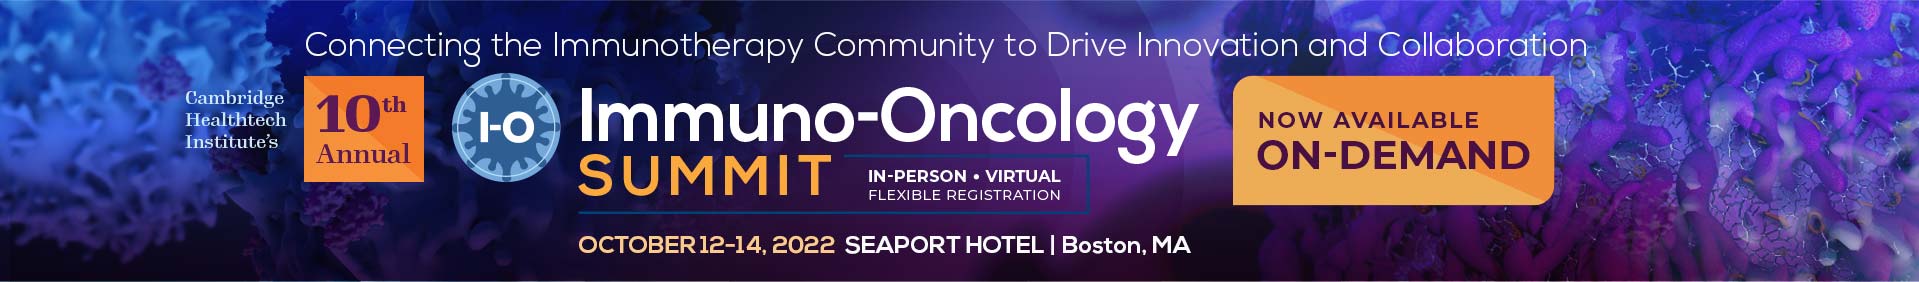 Immuno-Oncology Summit 2022